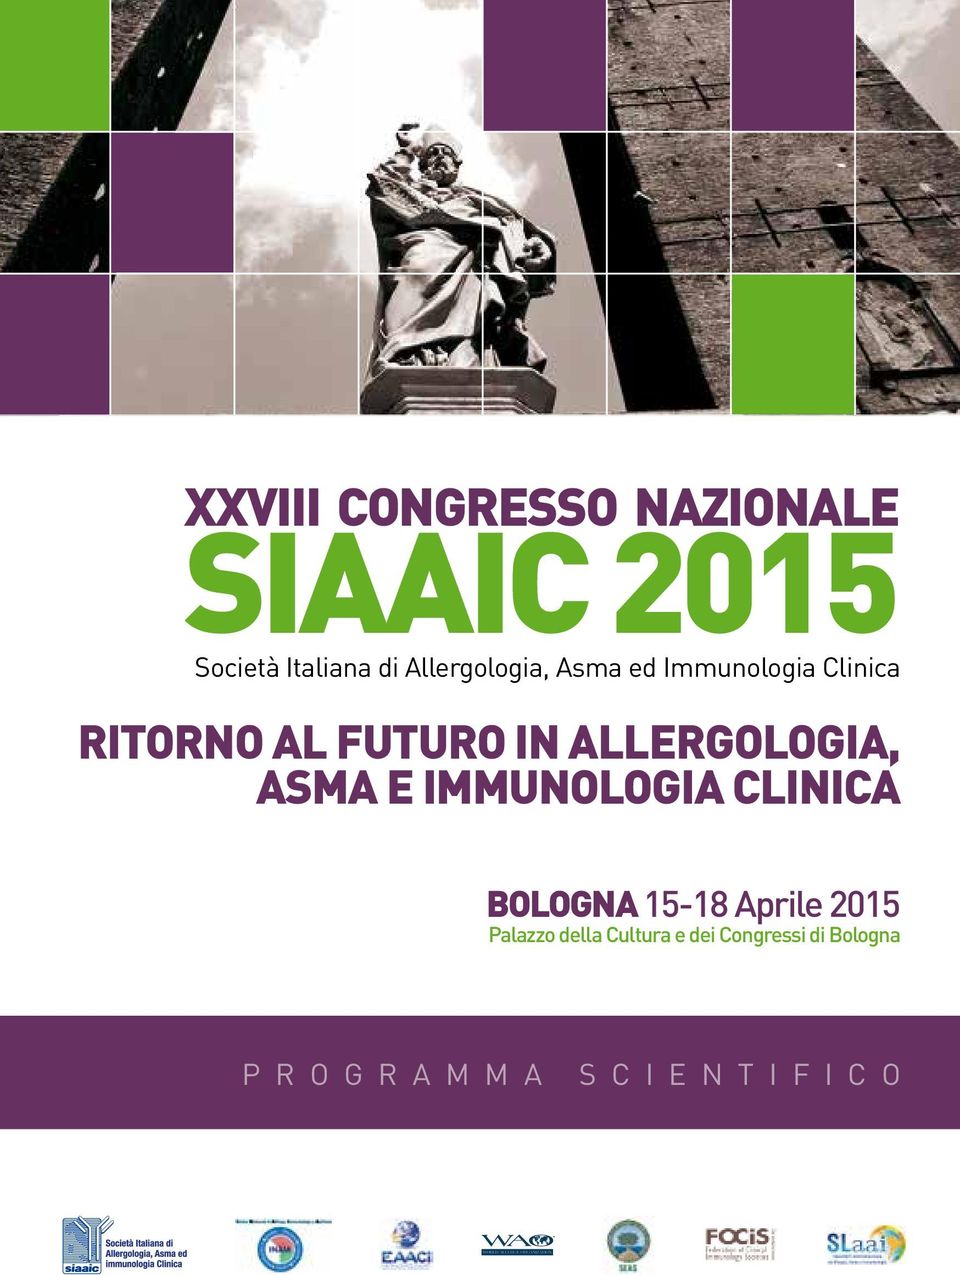 allergologia, asma e immunologia clinica Bologna 15-18 Aprile 2015